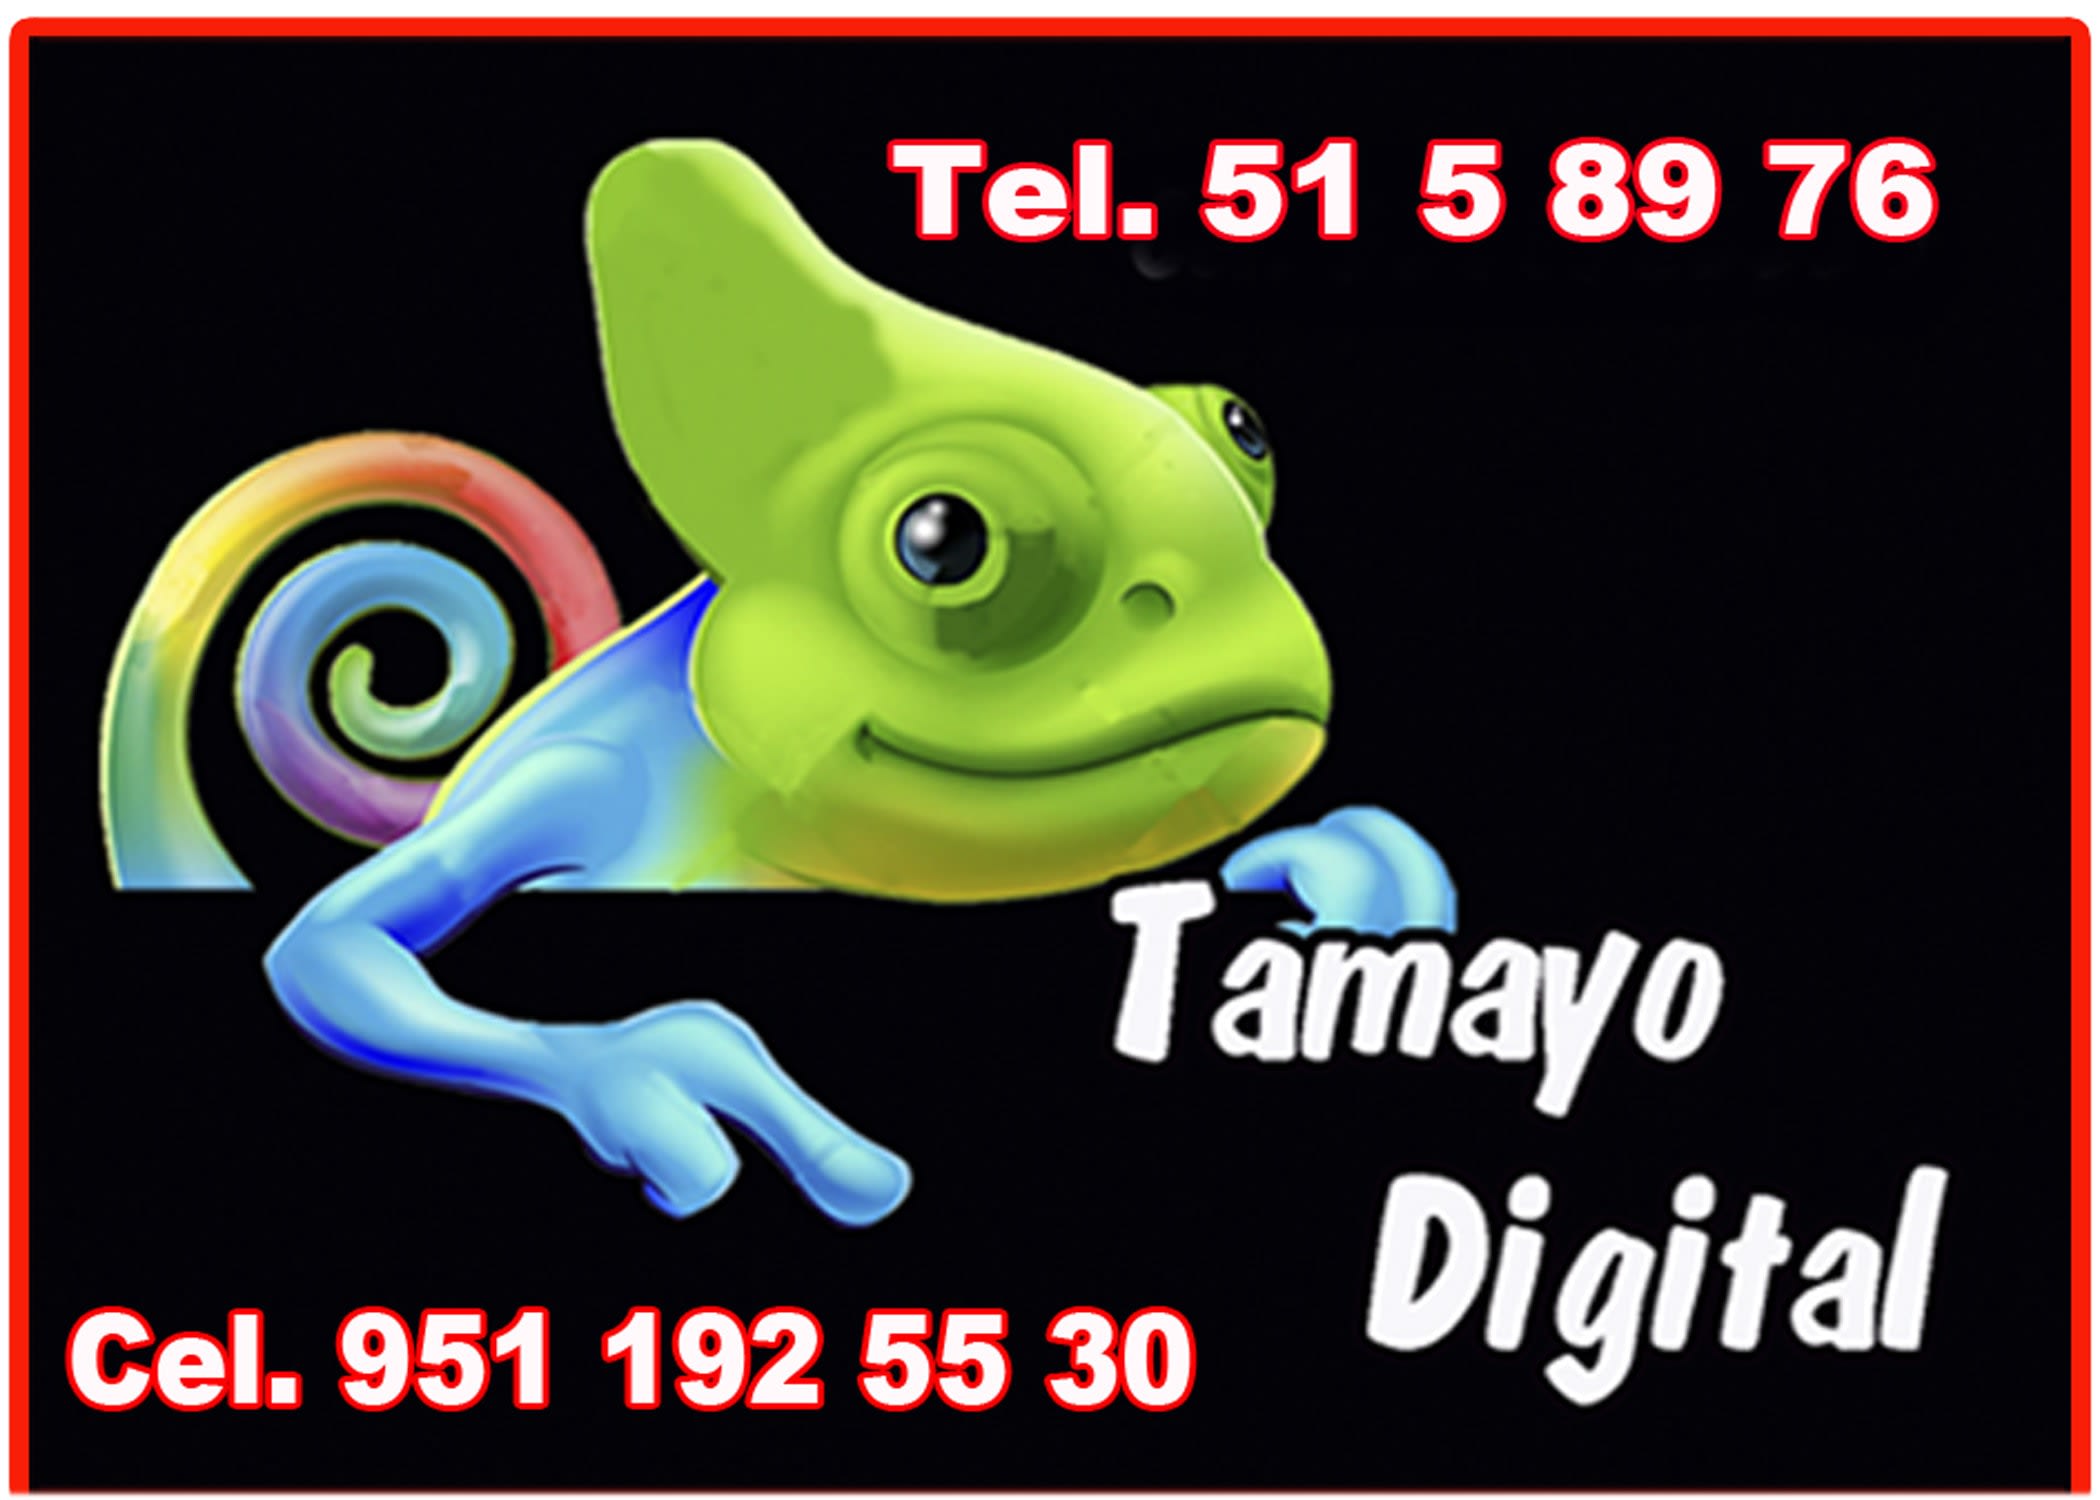 Tamayo Digital